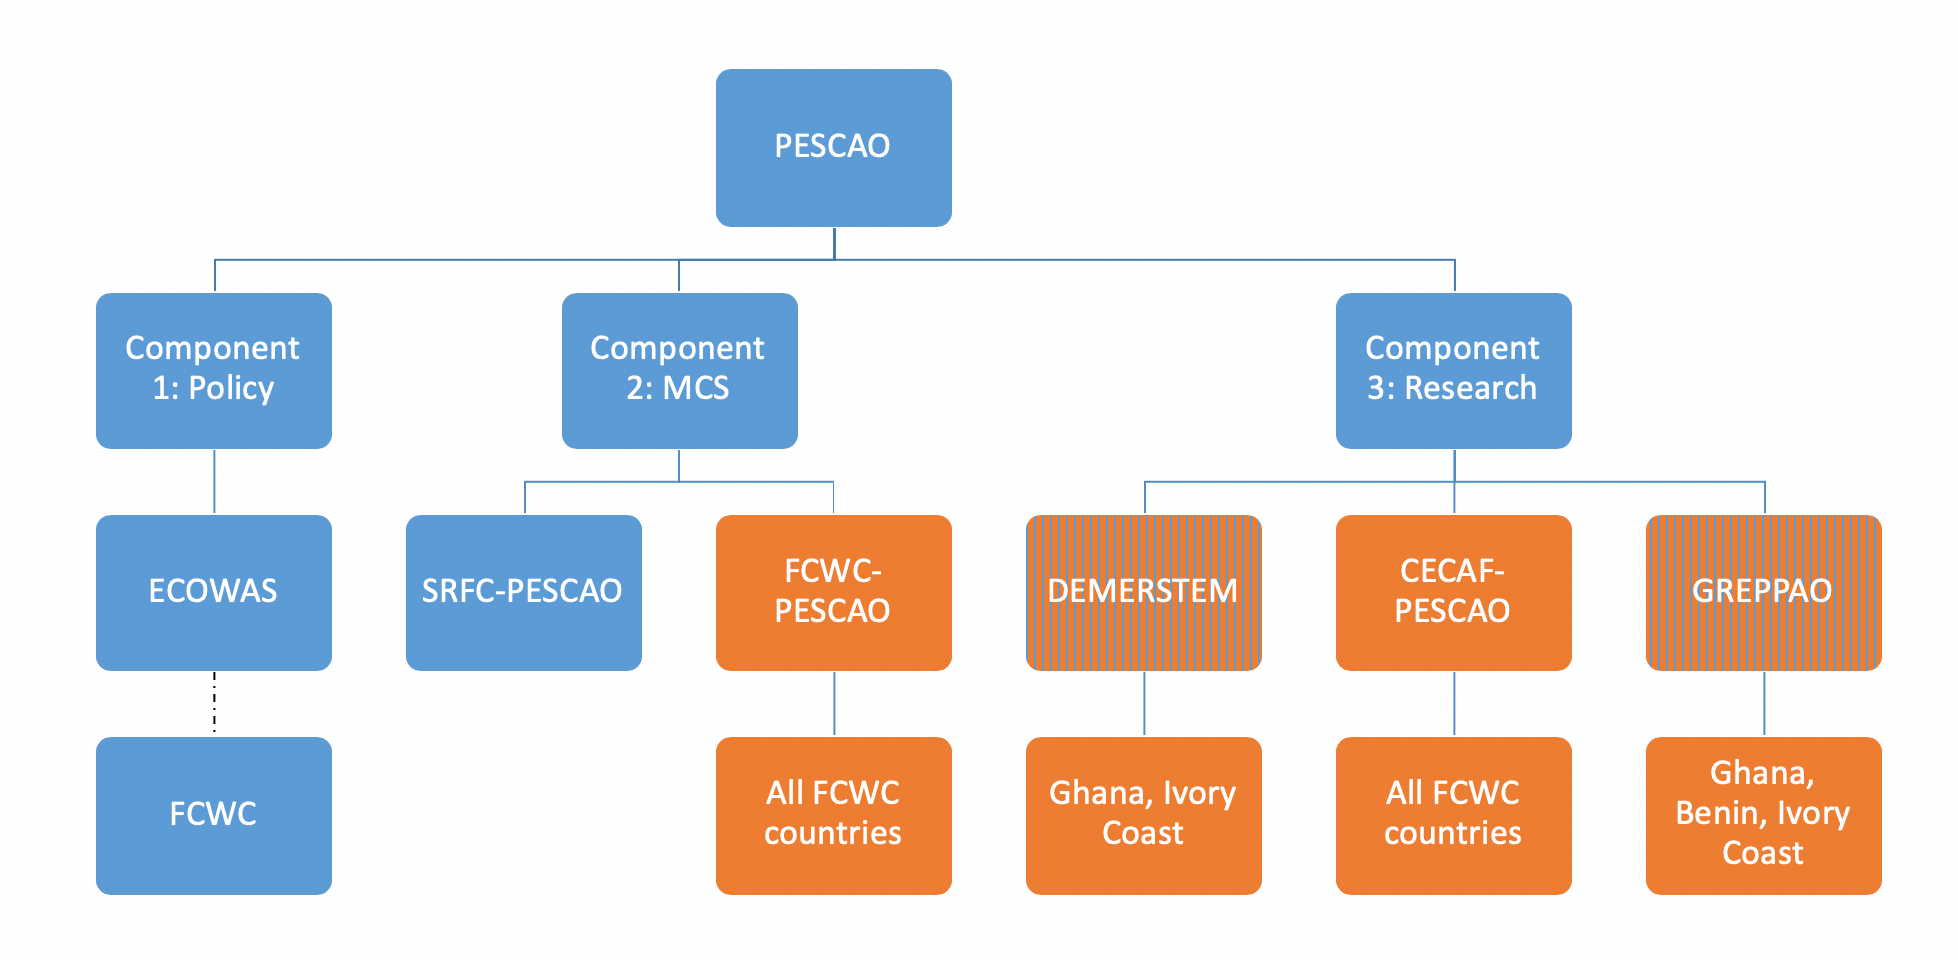 PESCAO Component 2: FCWC-PESCAO